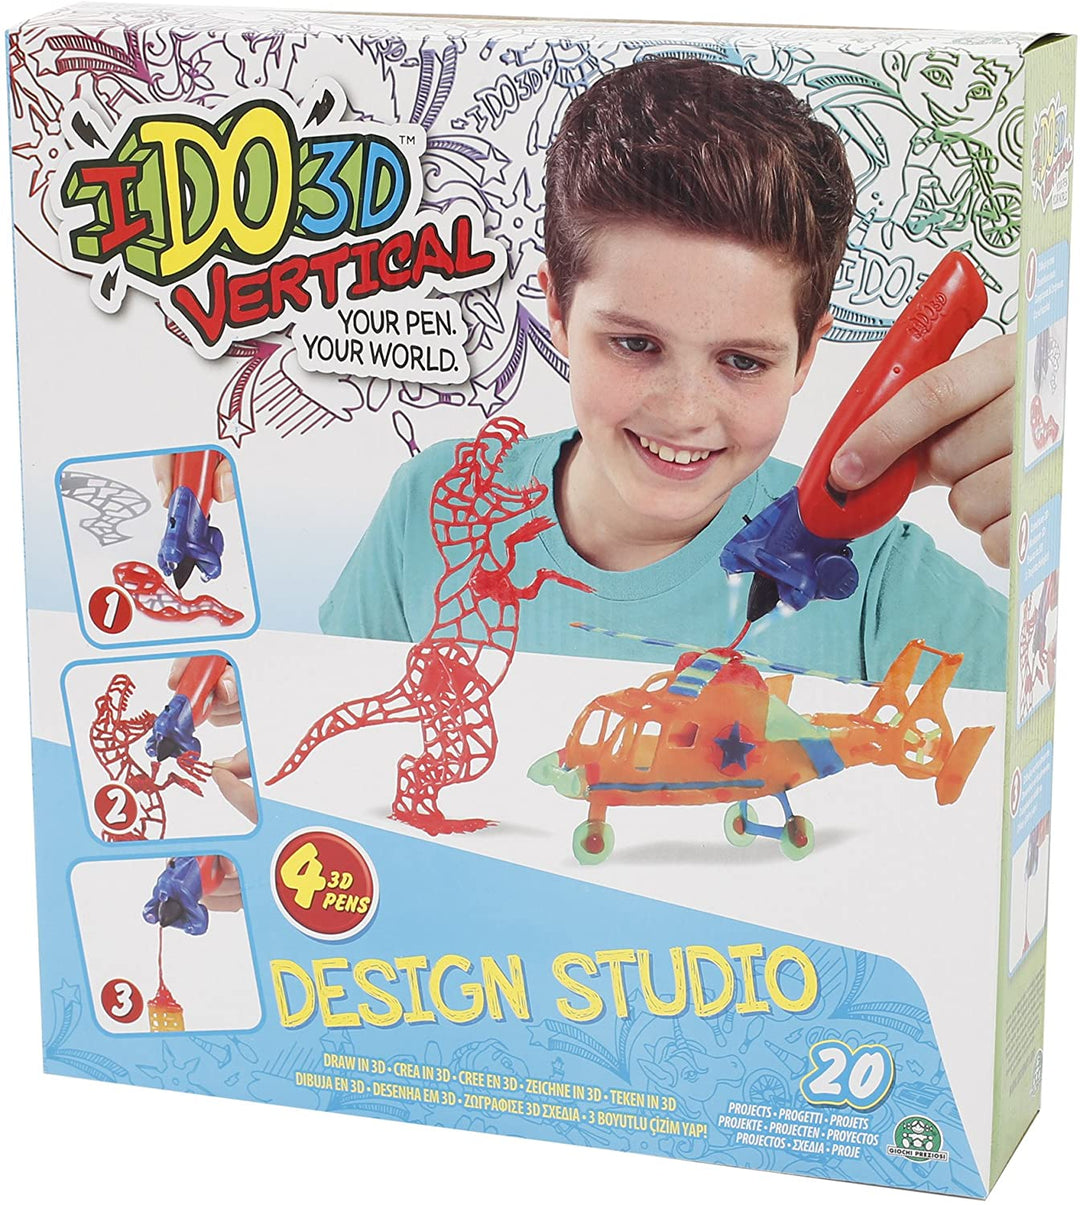 Ido3D Design Studio